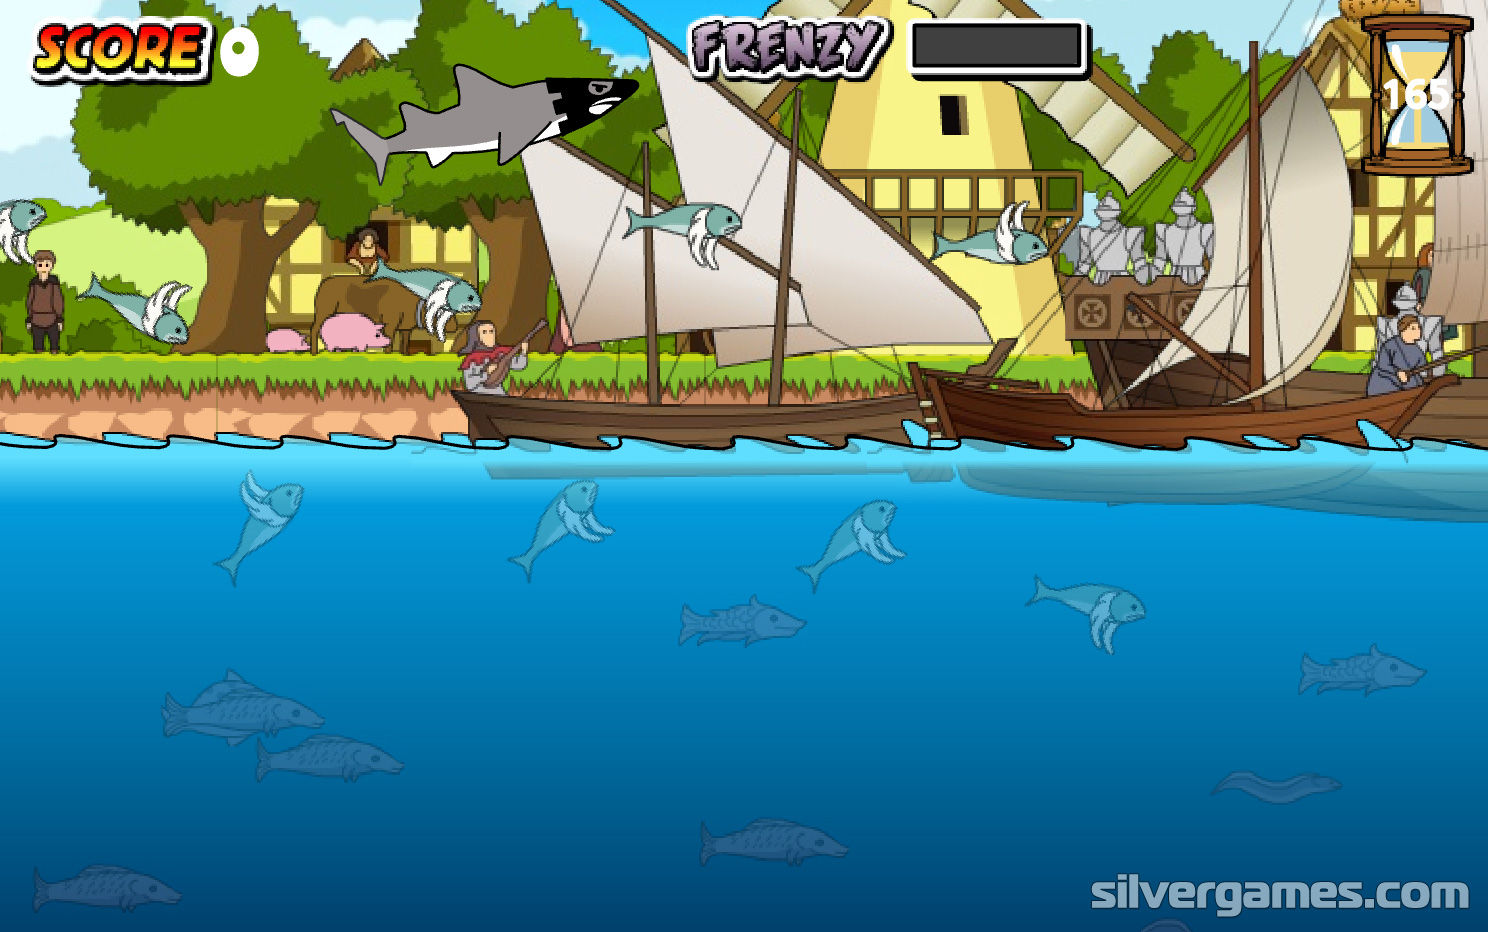 Medieval Shark - Flash Game Playthrough 